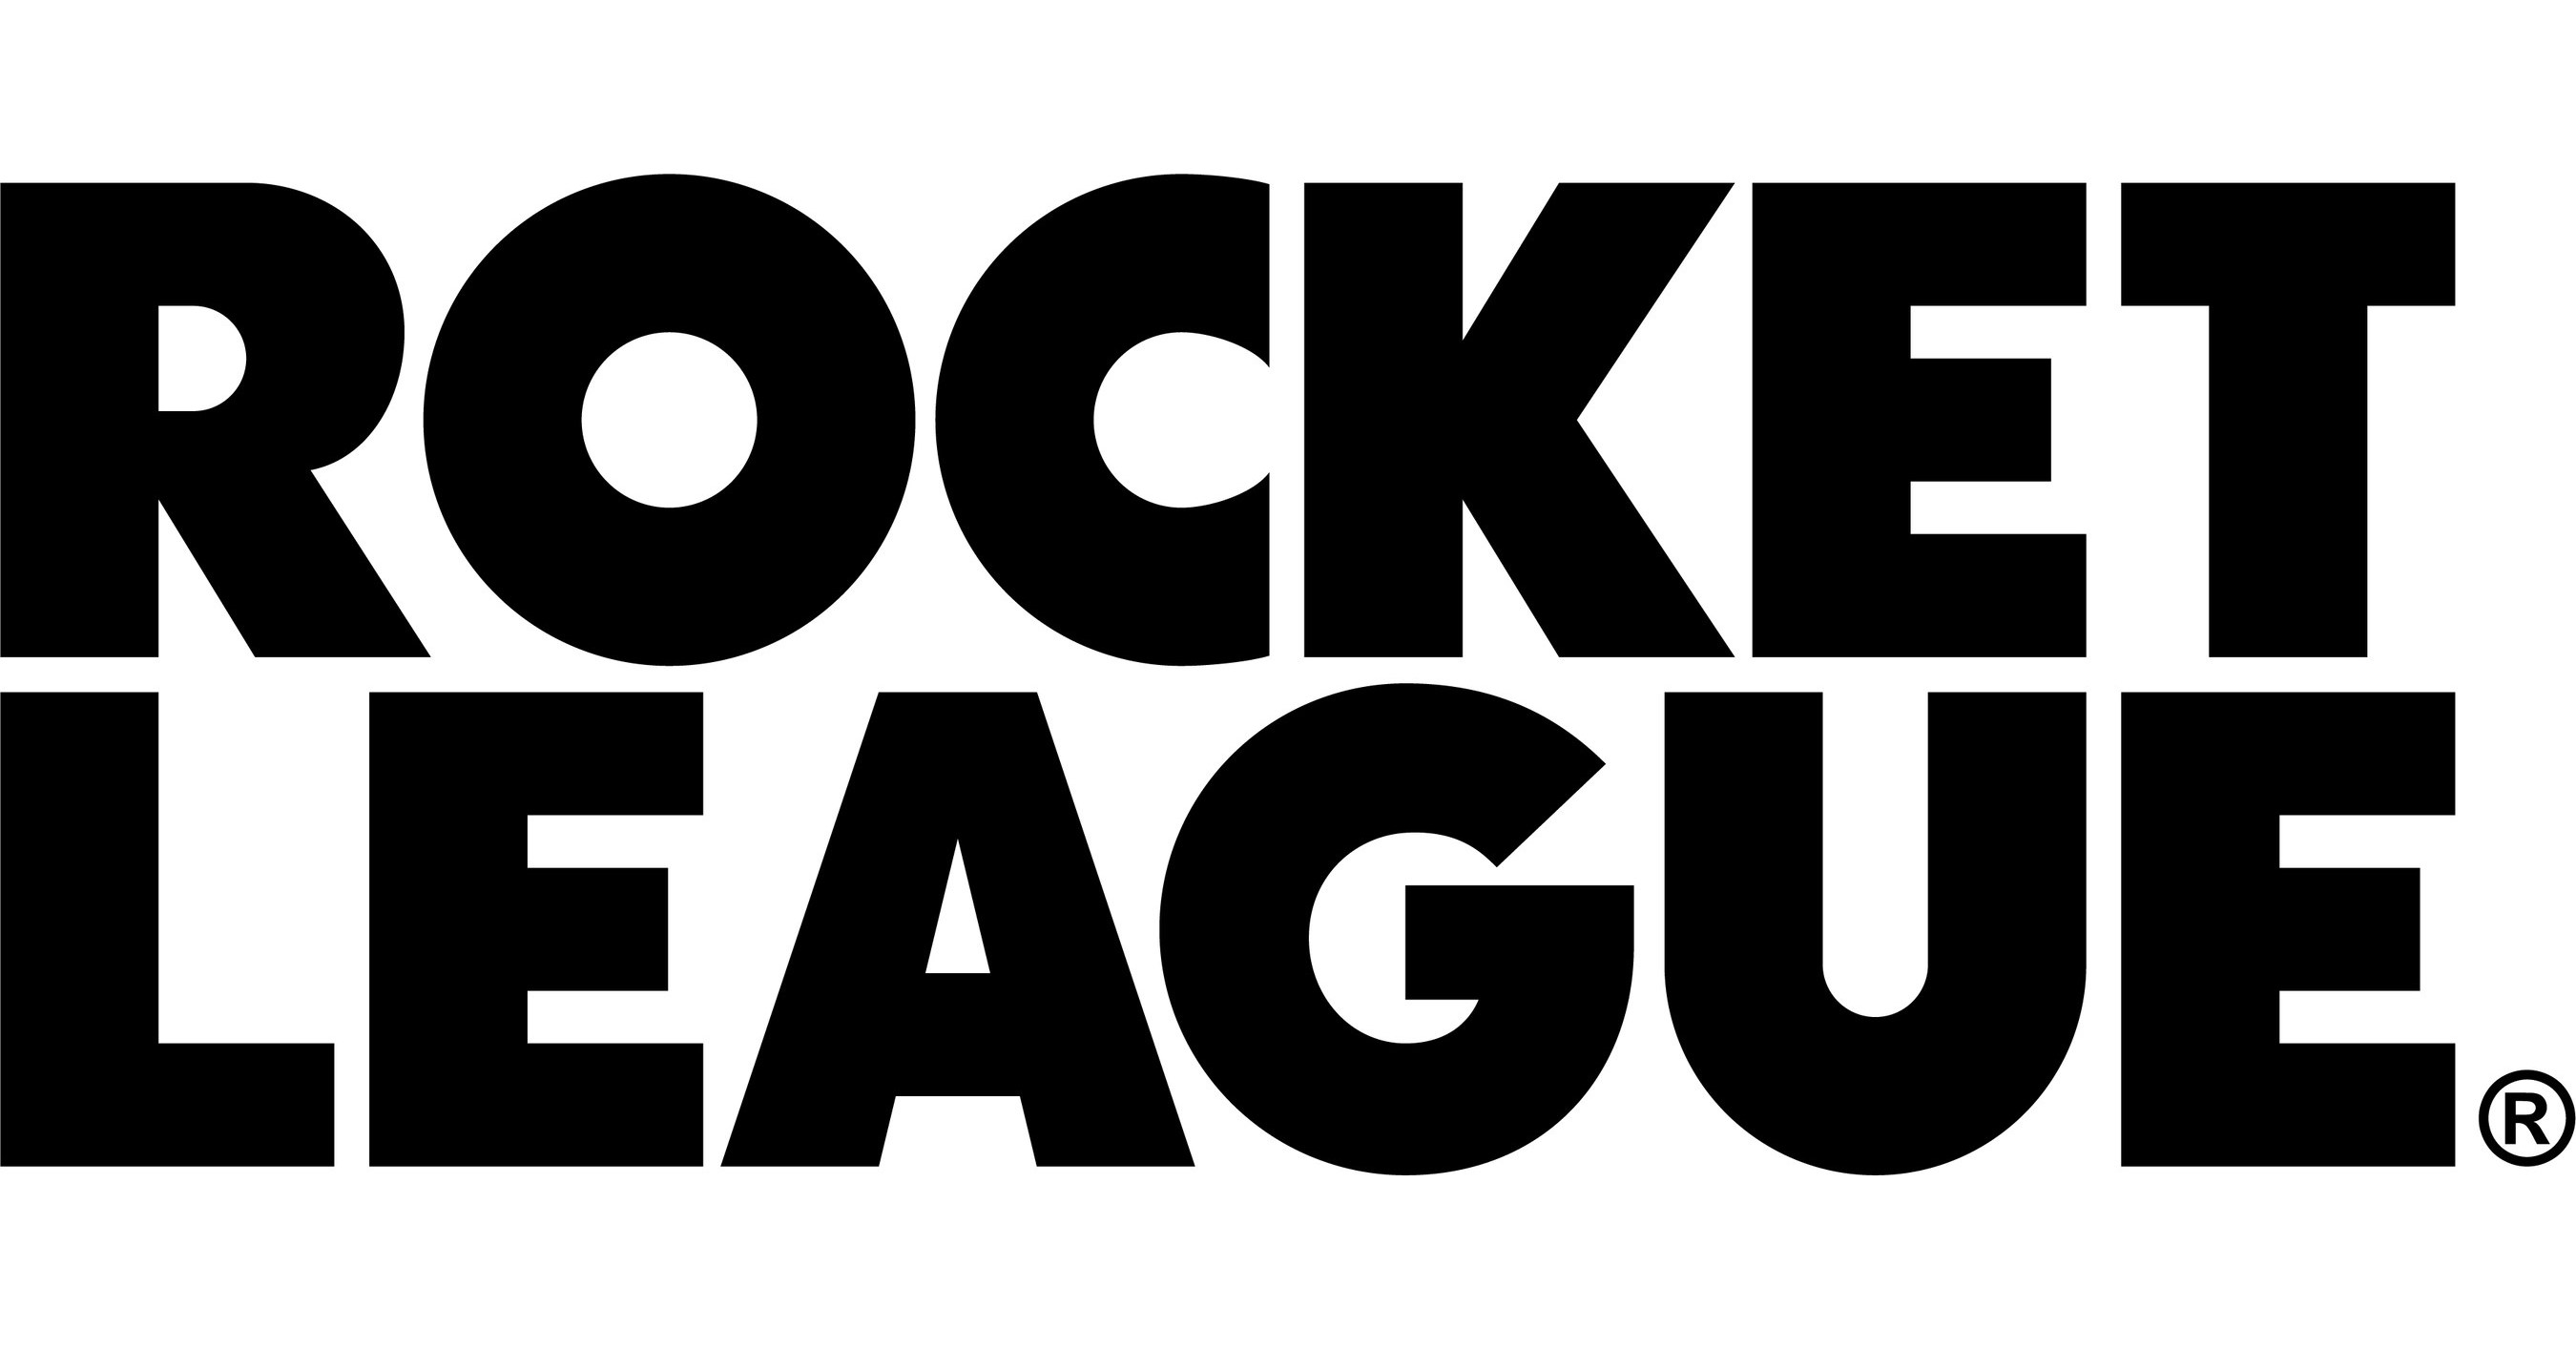 List of tournament titles w/ examples : r/RocketLeague